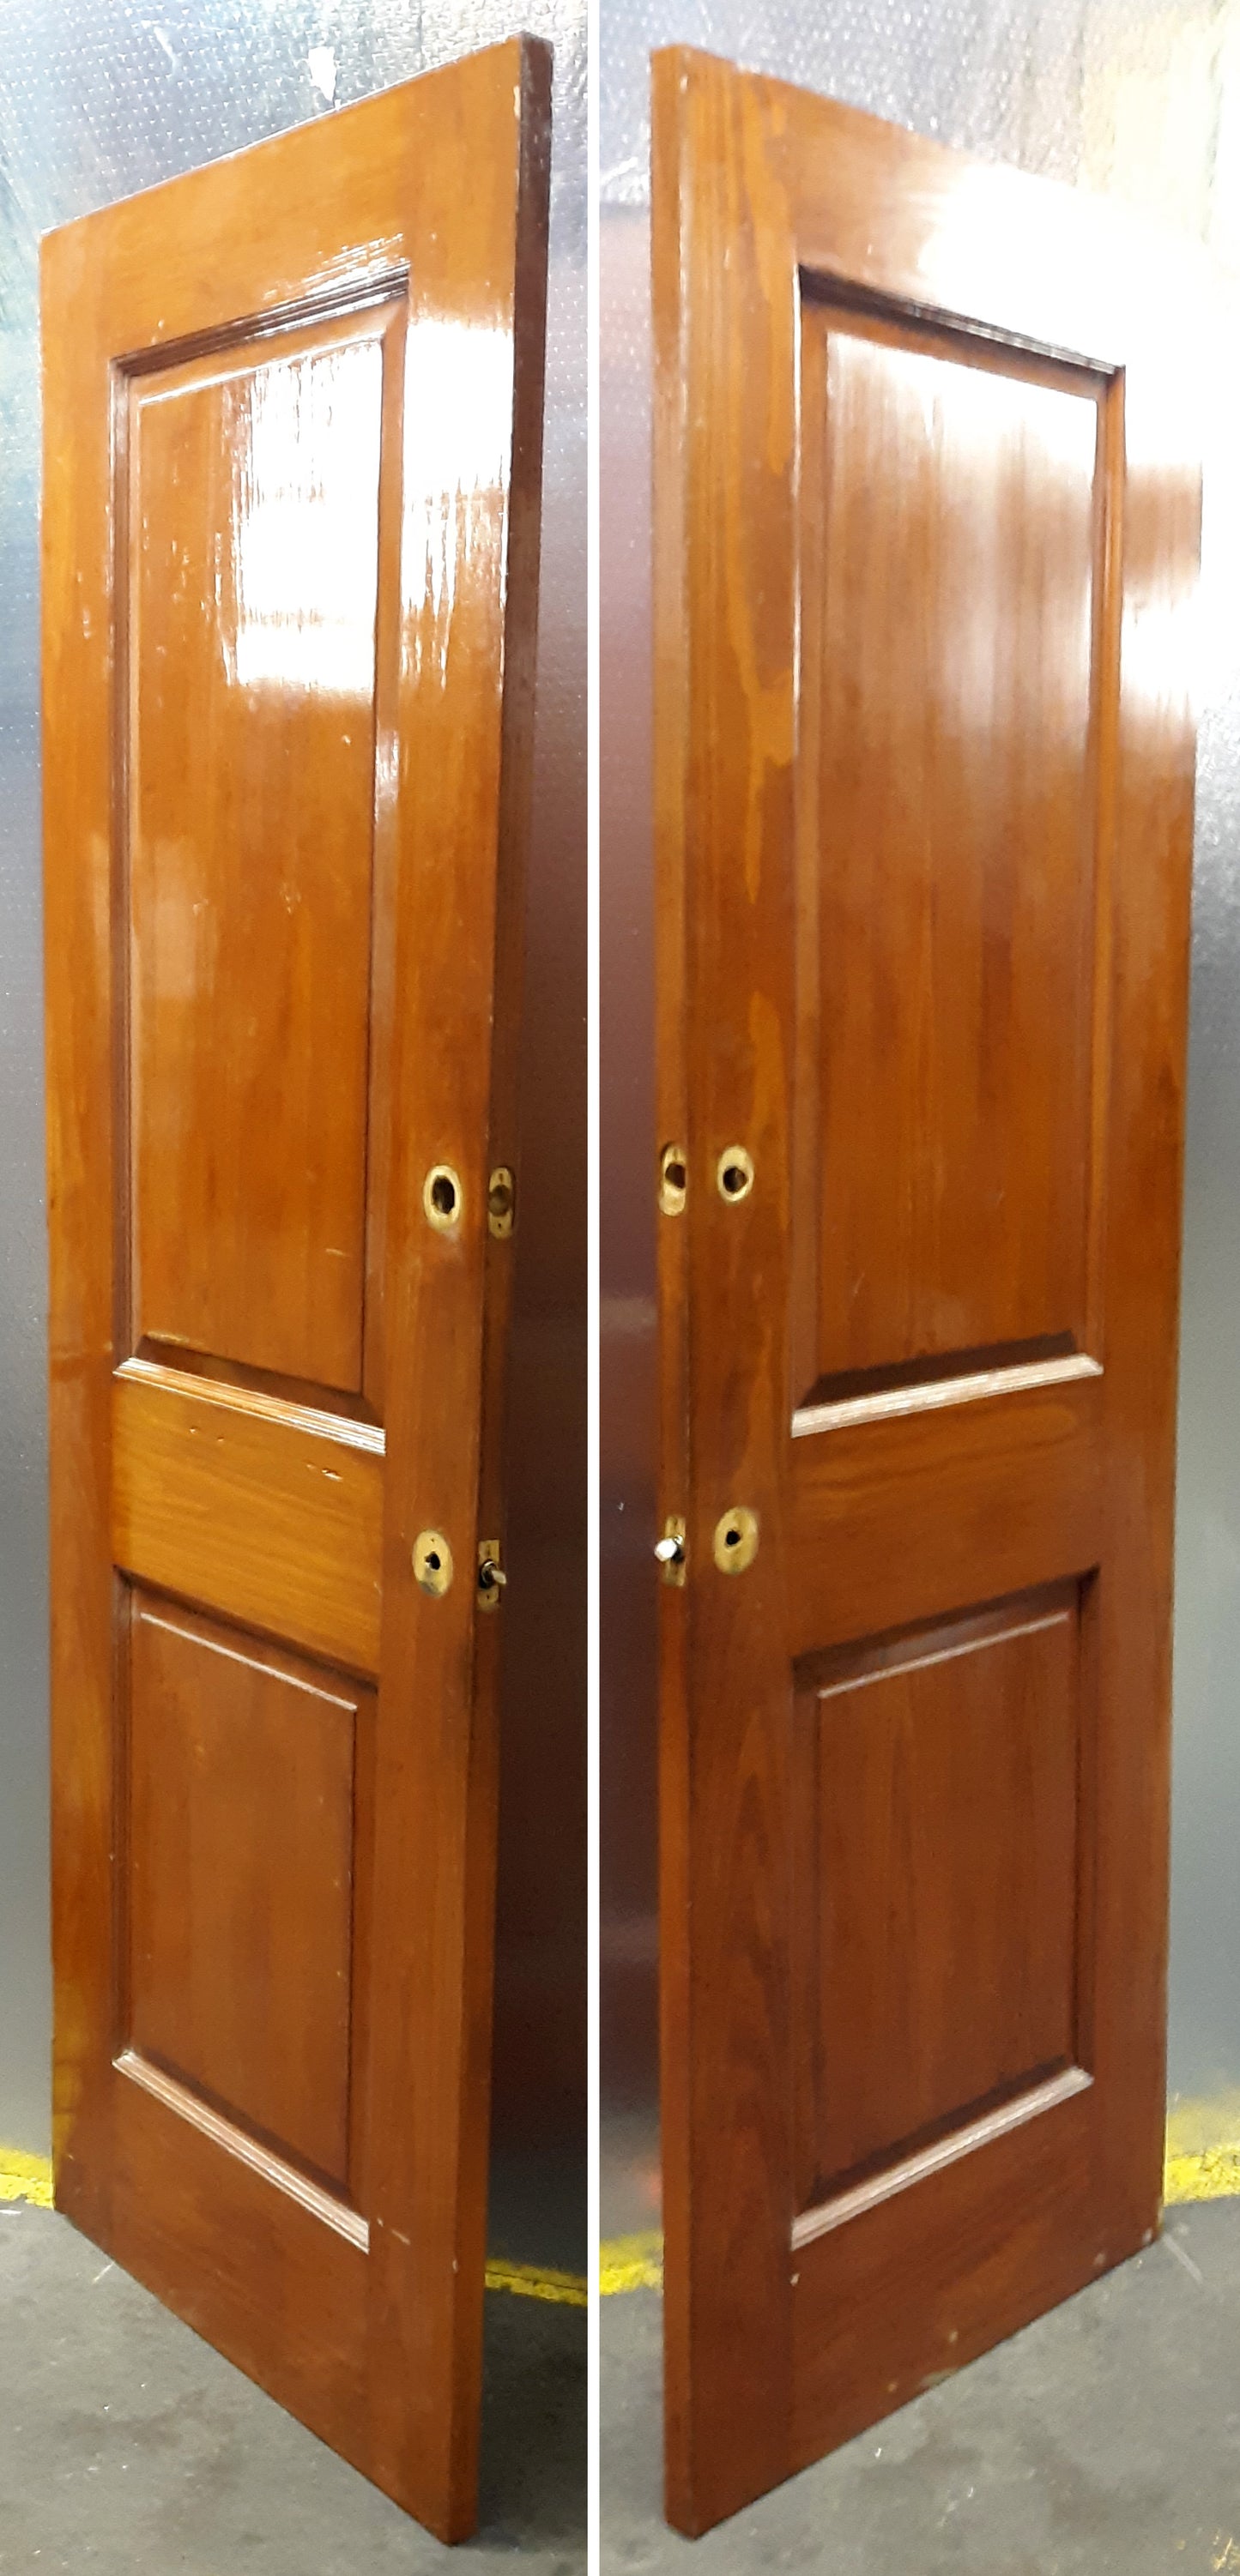 30"x83" Antique Vintage Old Reclaimed Salvaged Interior Salvaged SOLID Wood Wooden Door 2 Panels